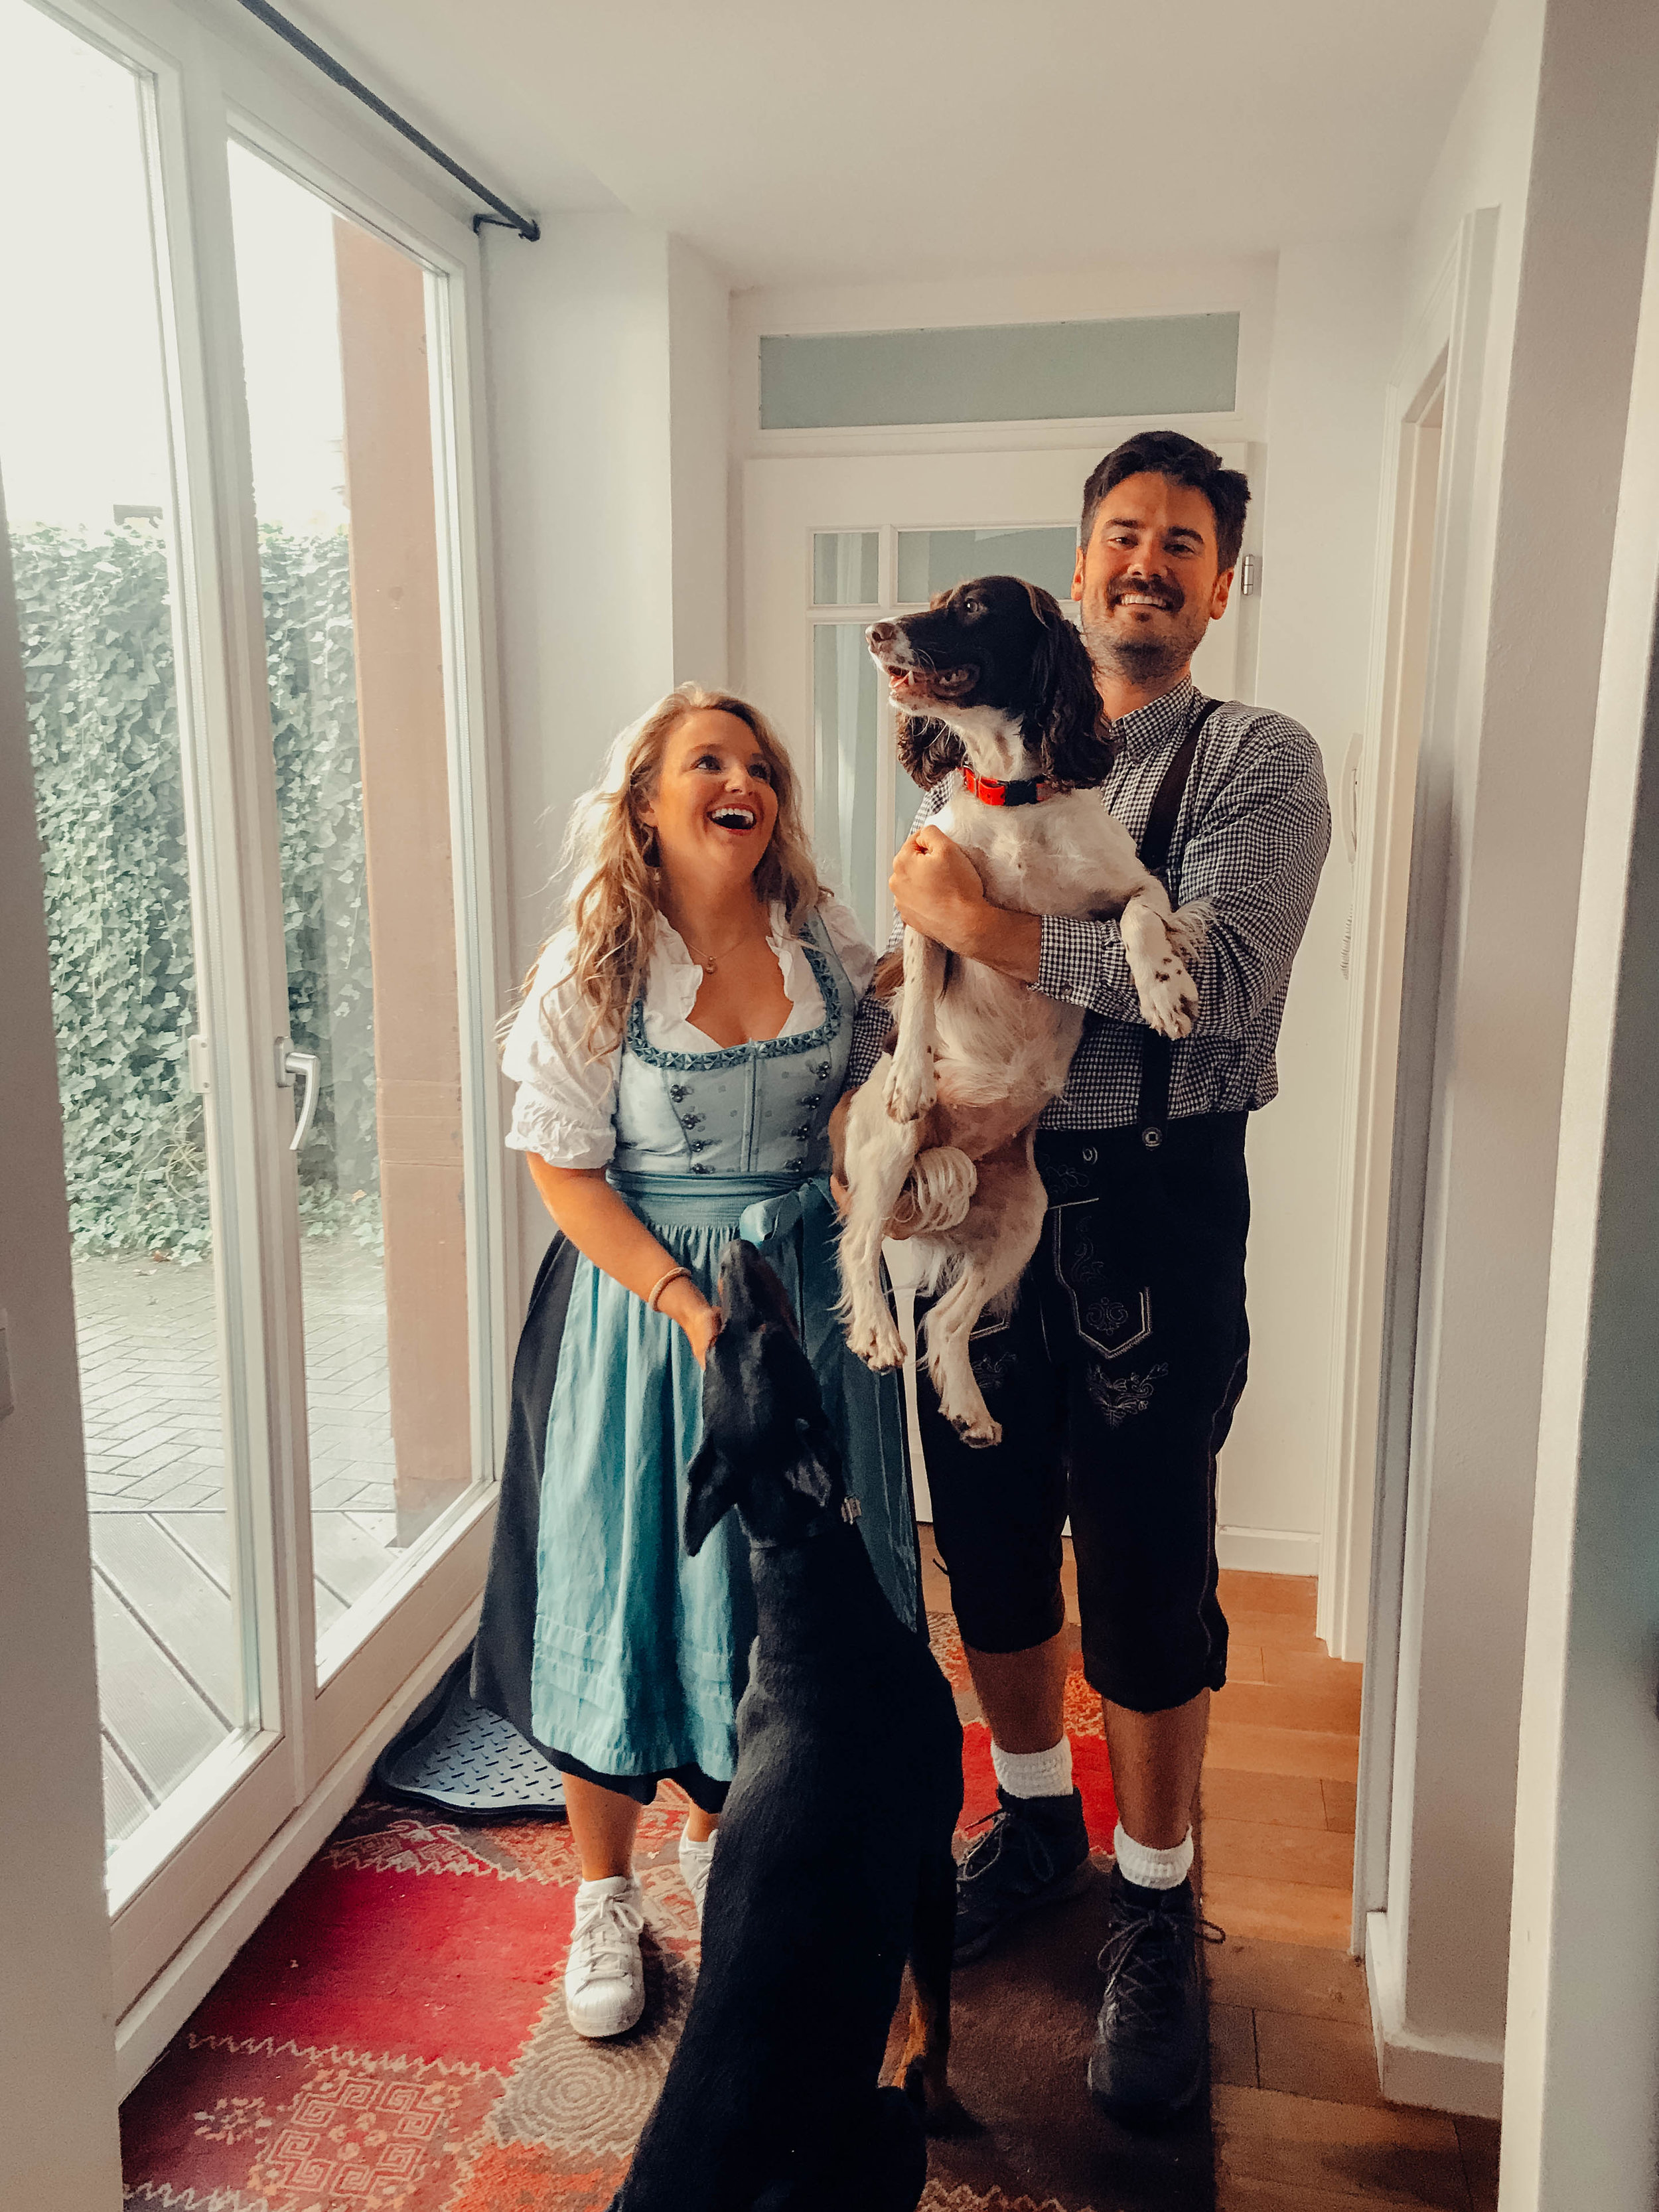 Helene &amp; family preparing for Oktoberfest (HQ: yes, we're fully in puppy love too)